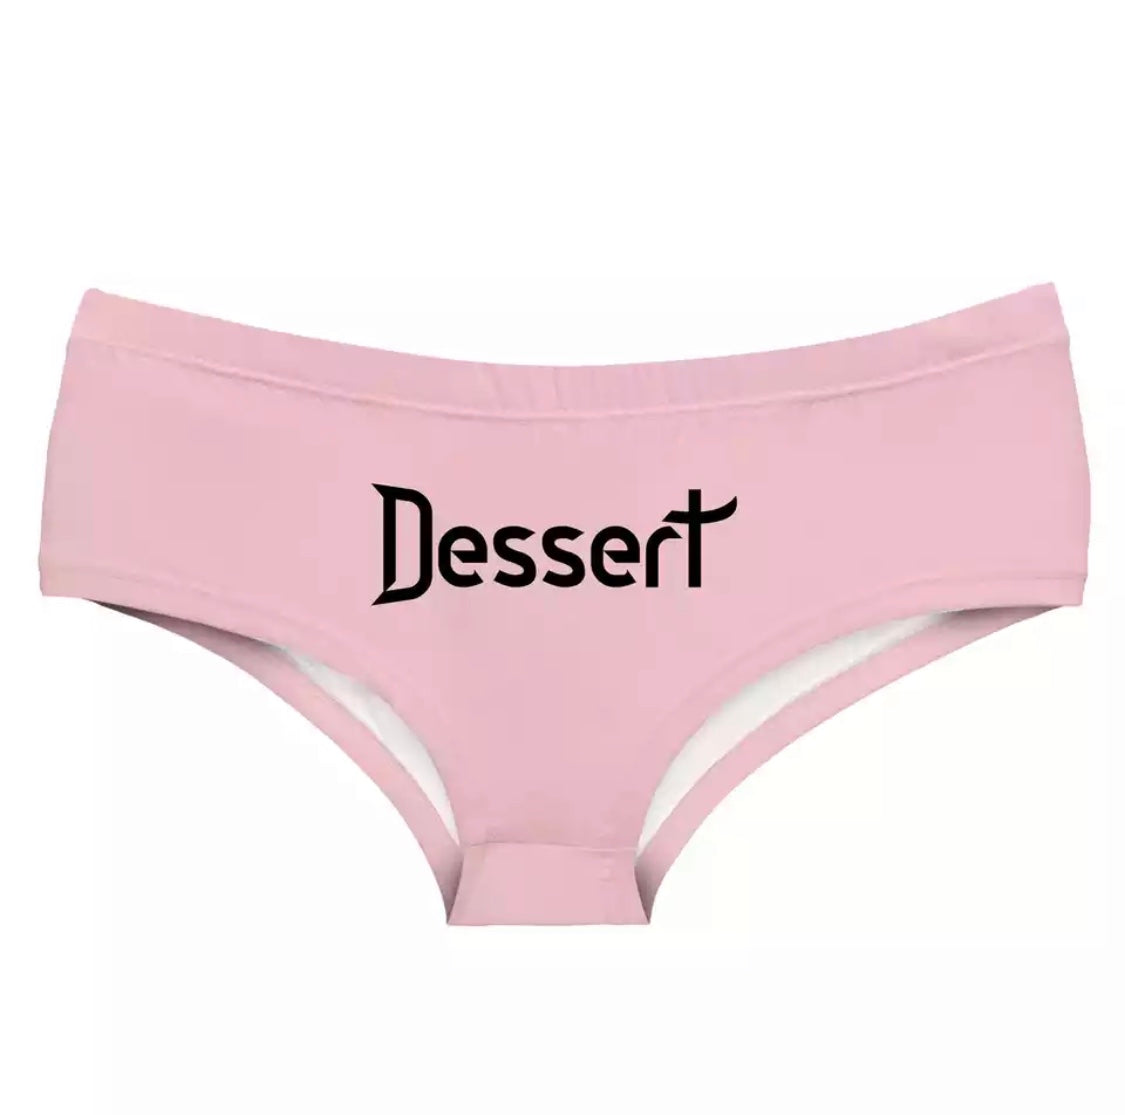 Dessert Panties